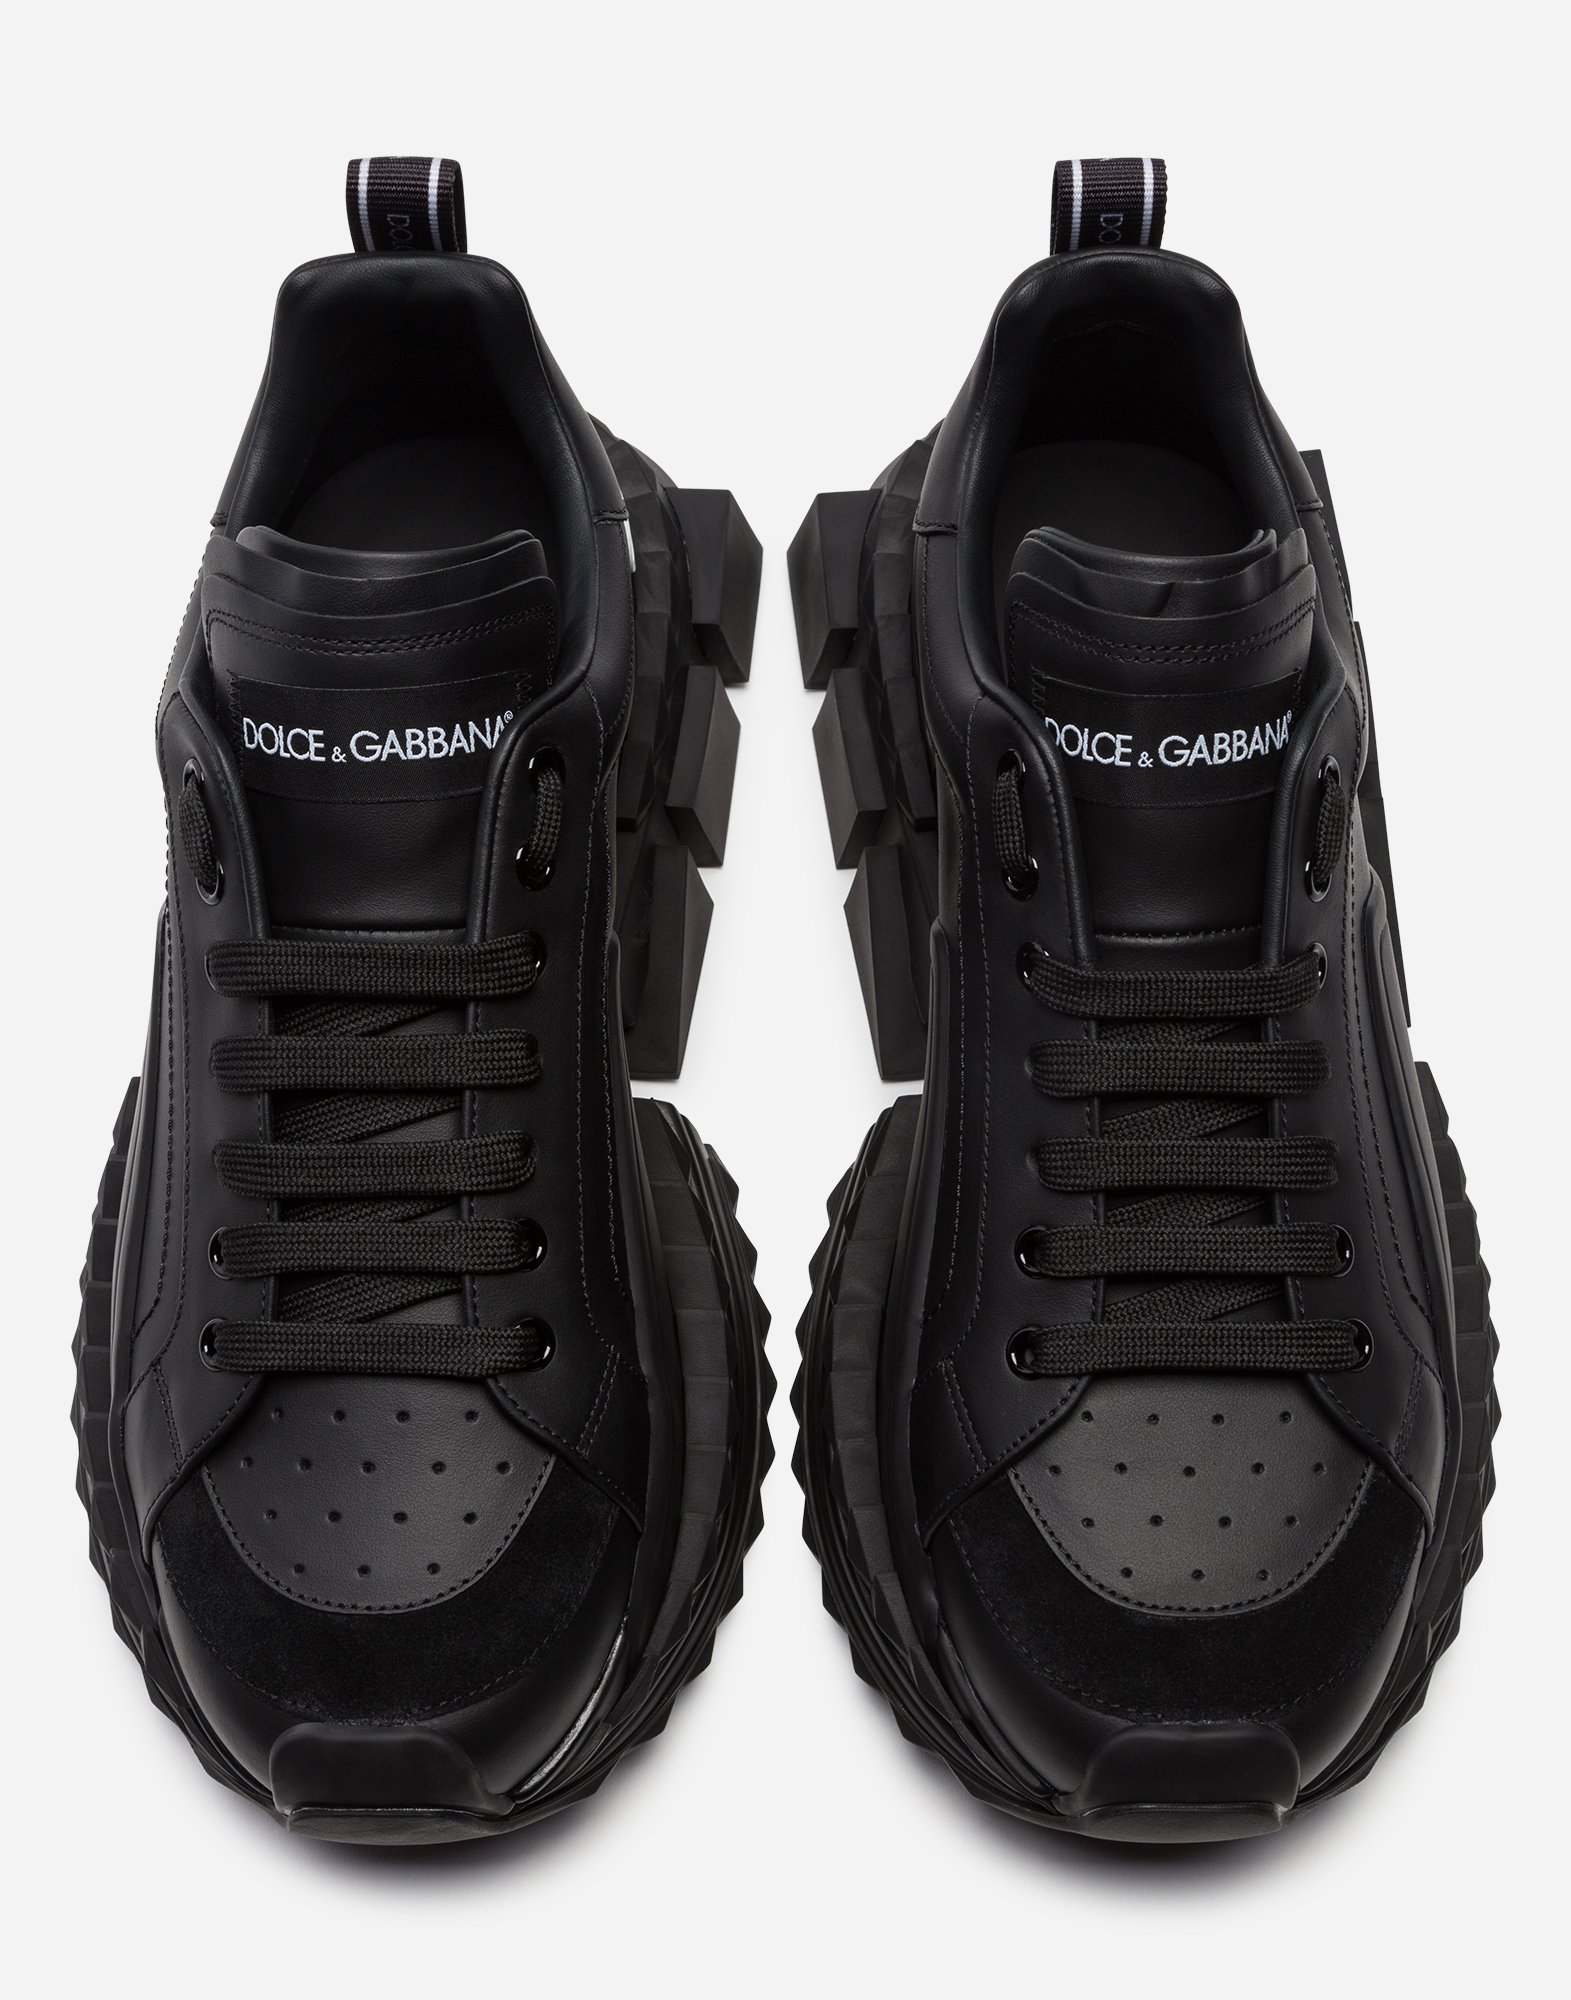 dolce & gabbana black shoes